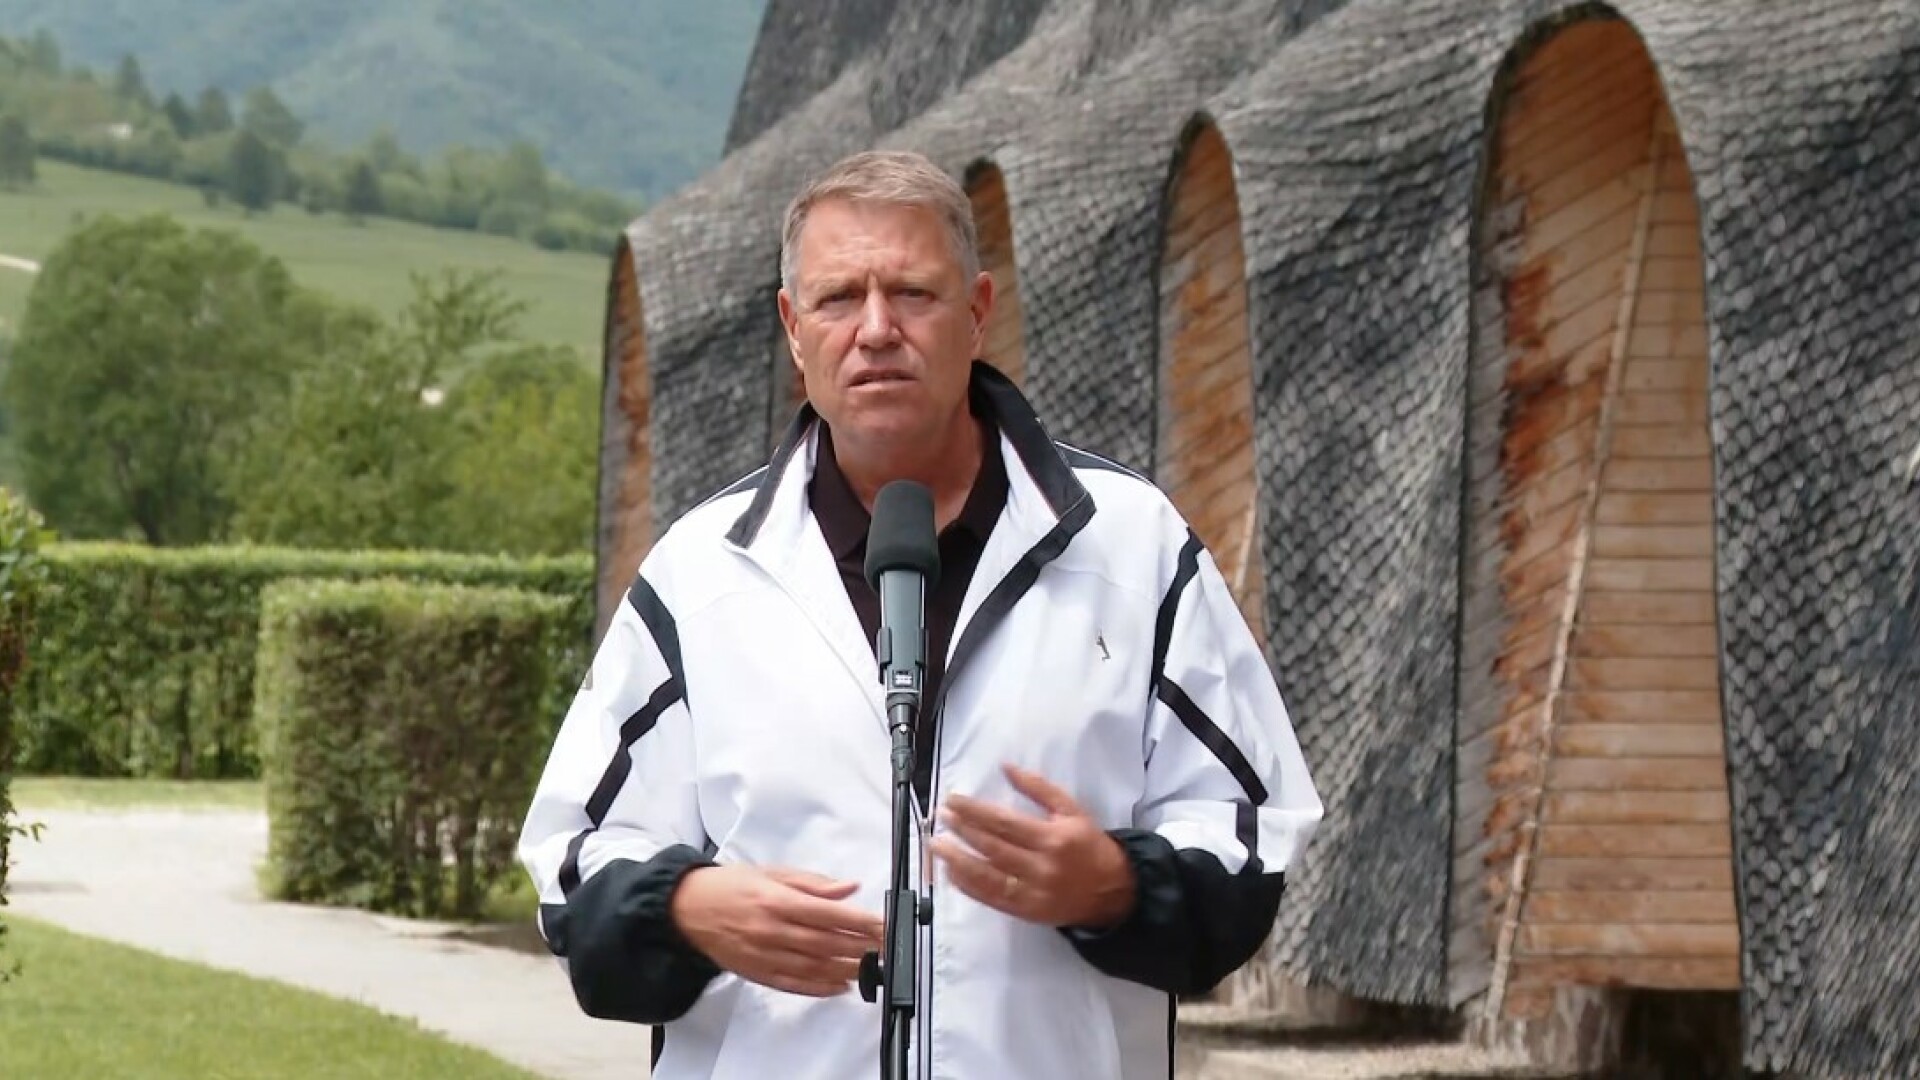 Klaus Iohannis